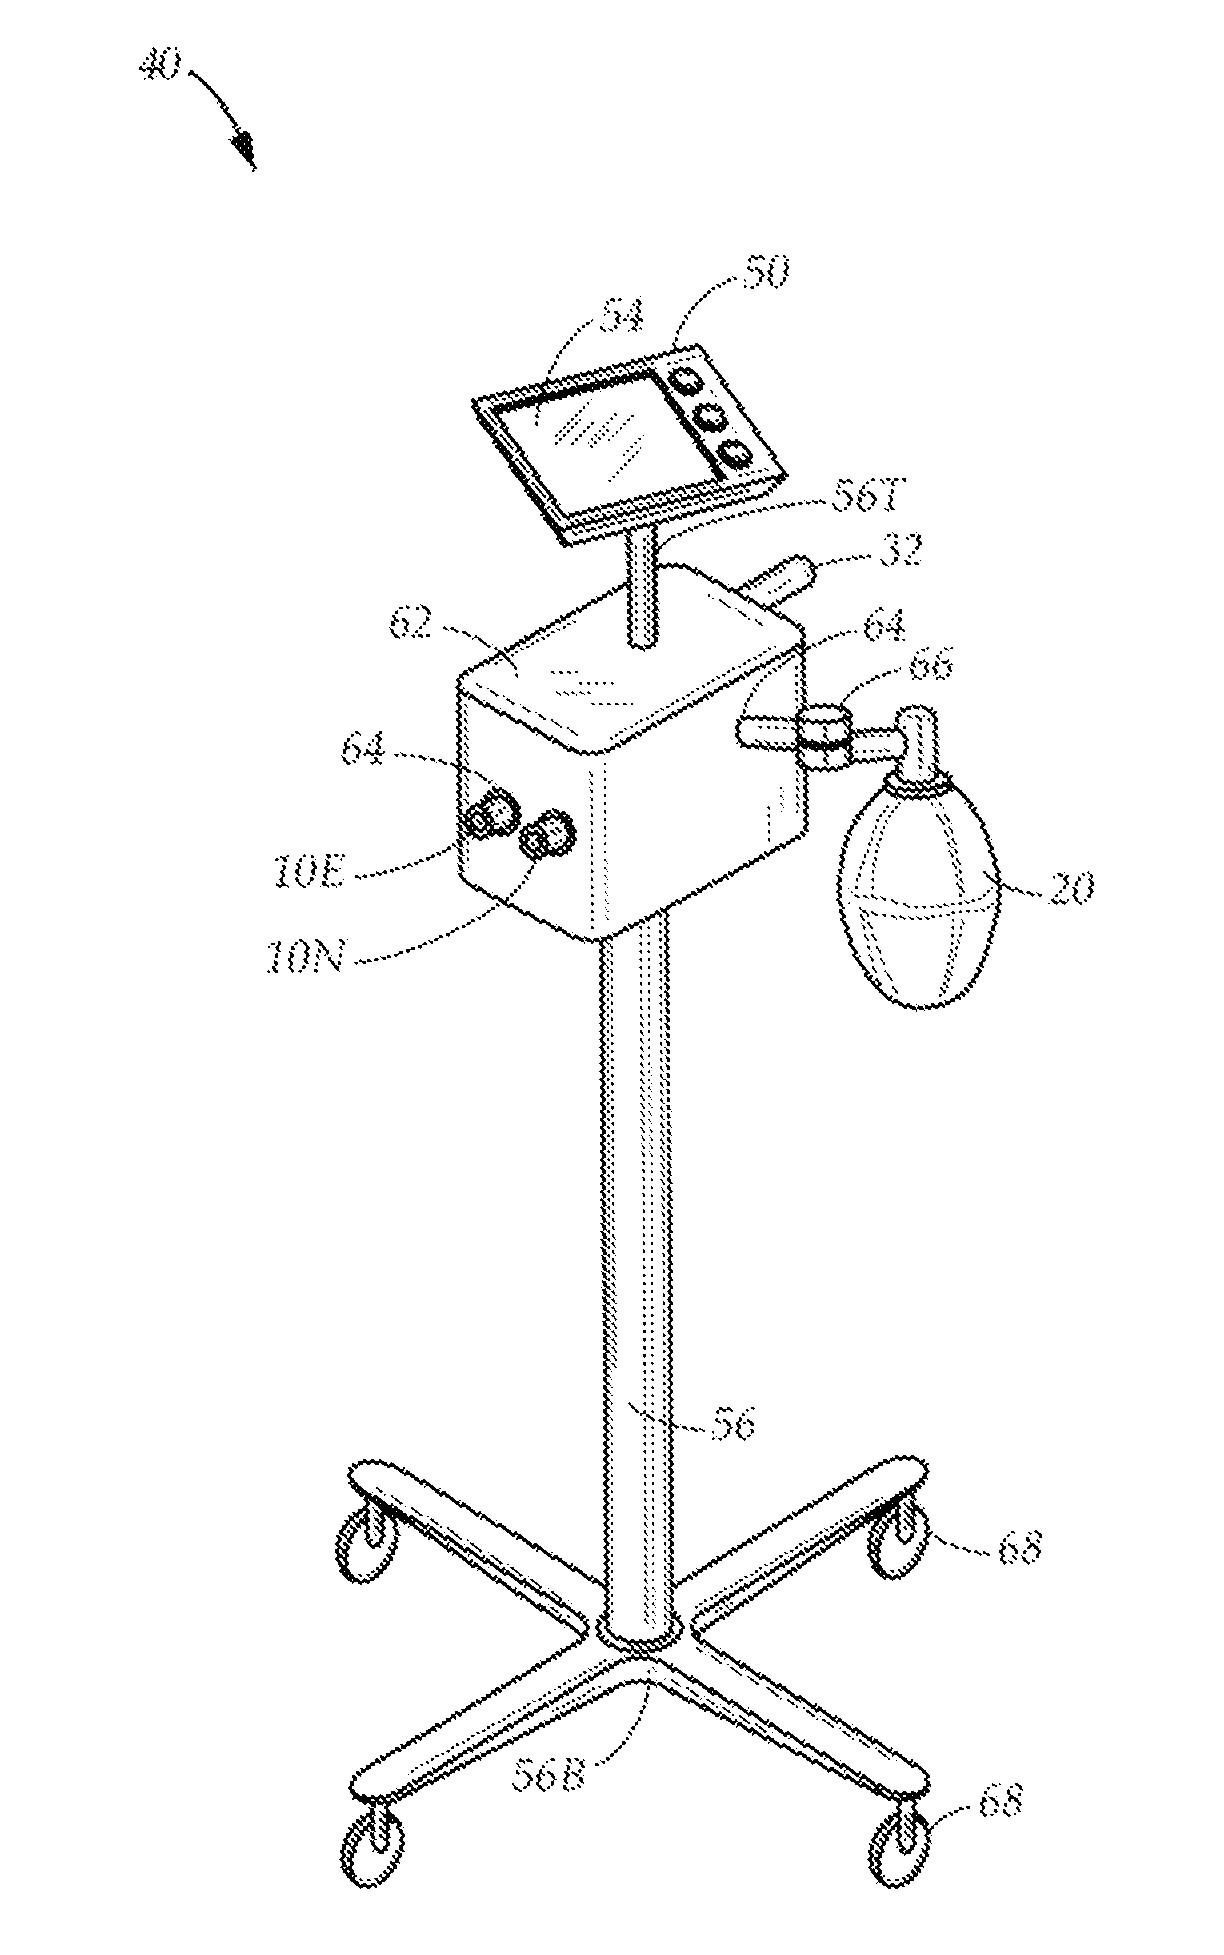 Portable manual ventilation device